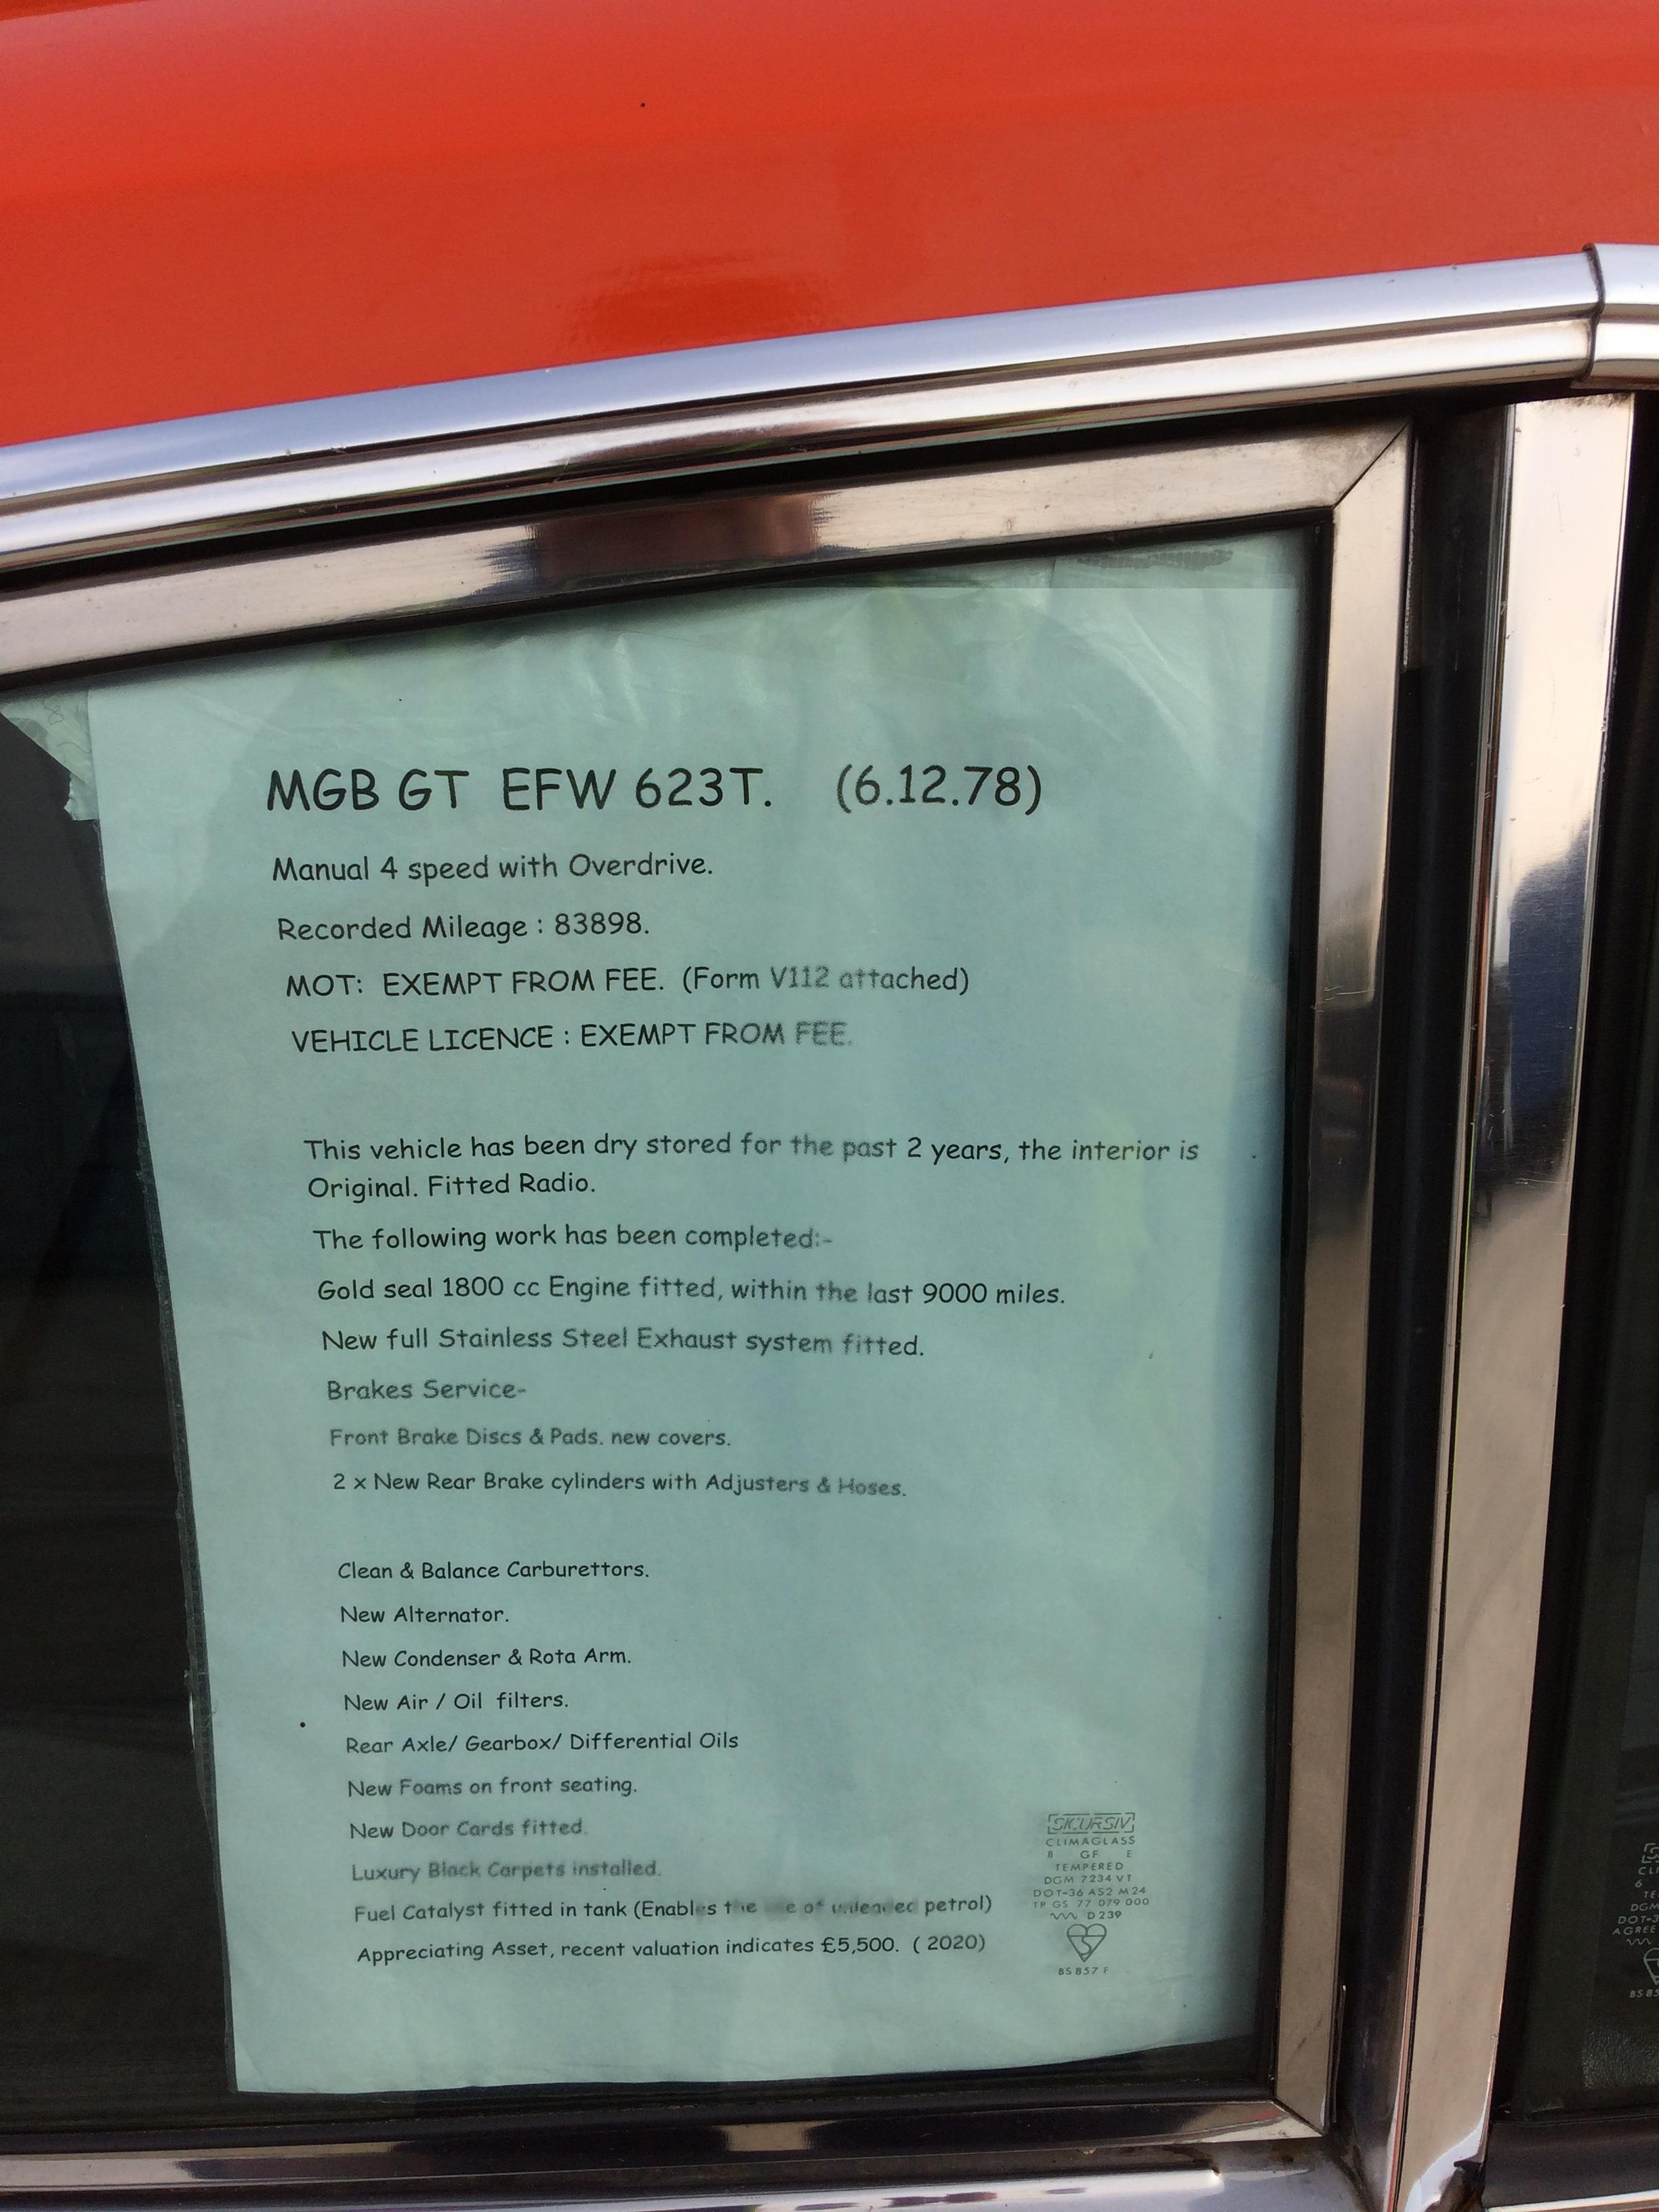 MGB GT 1.8 SPORTS HARD TOP - petrol - red Reg No EFW 623T Rec Mil 83,898 Date of last MOT: 21.2. - Image 22 of 25